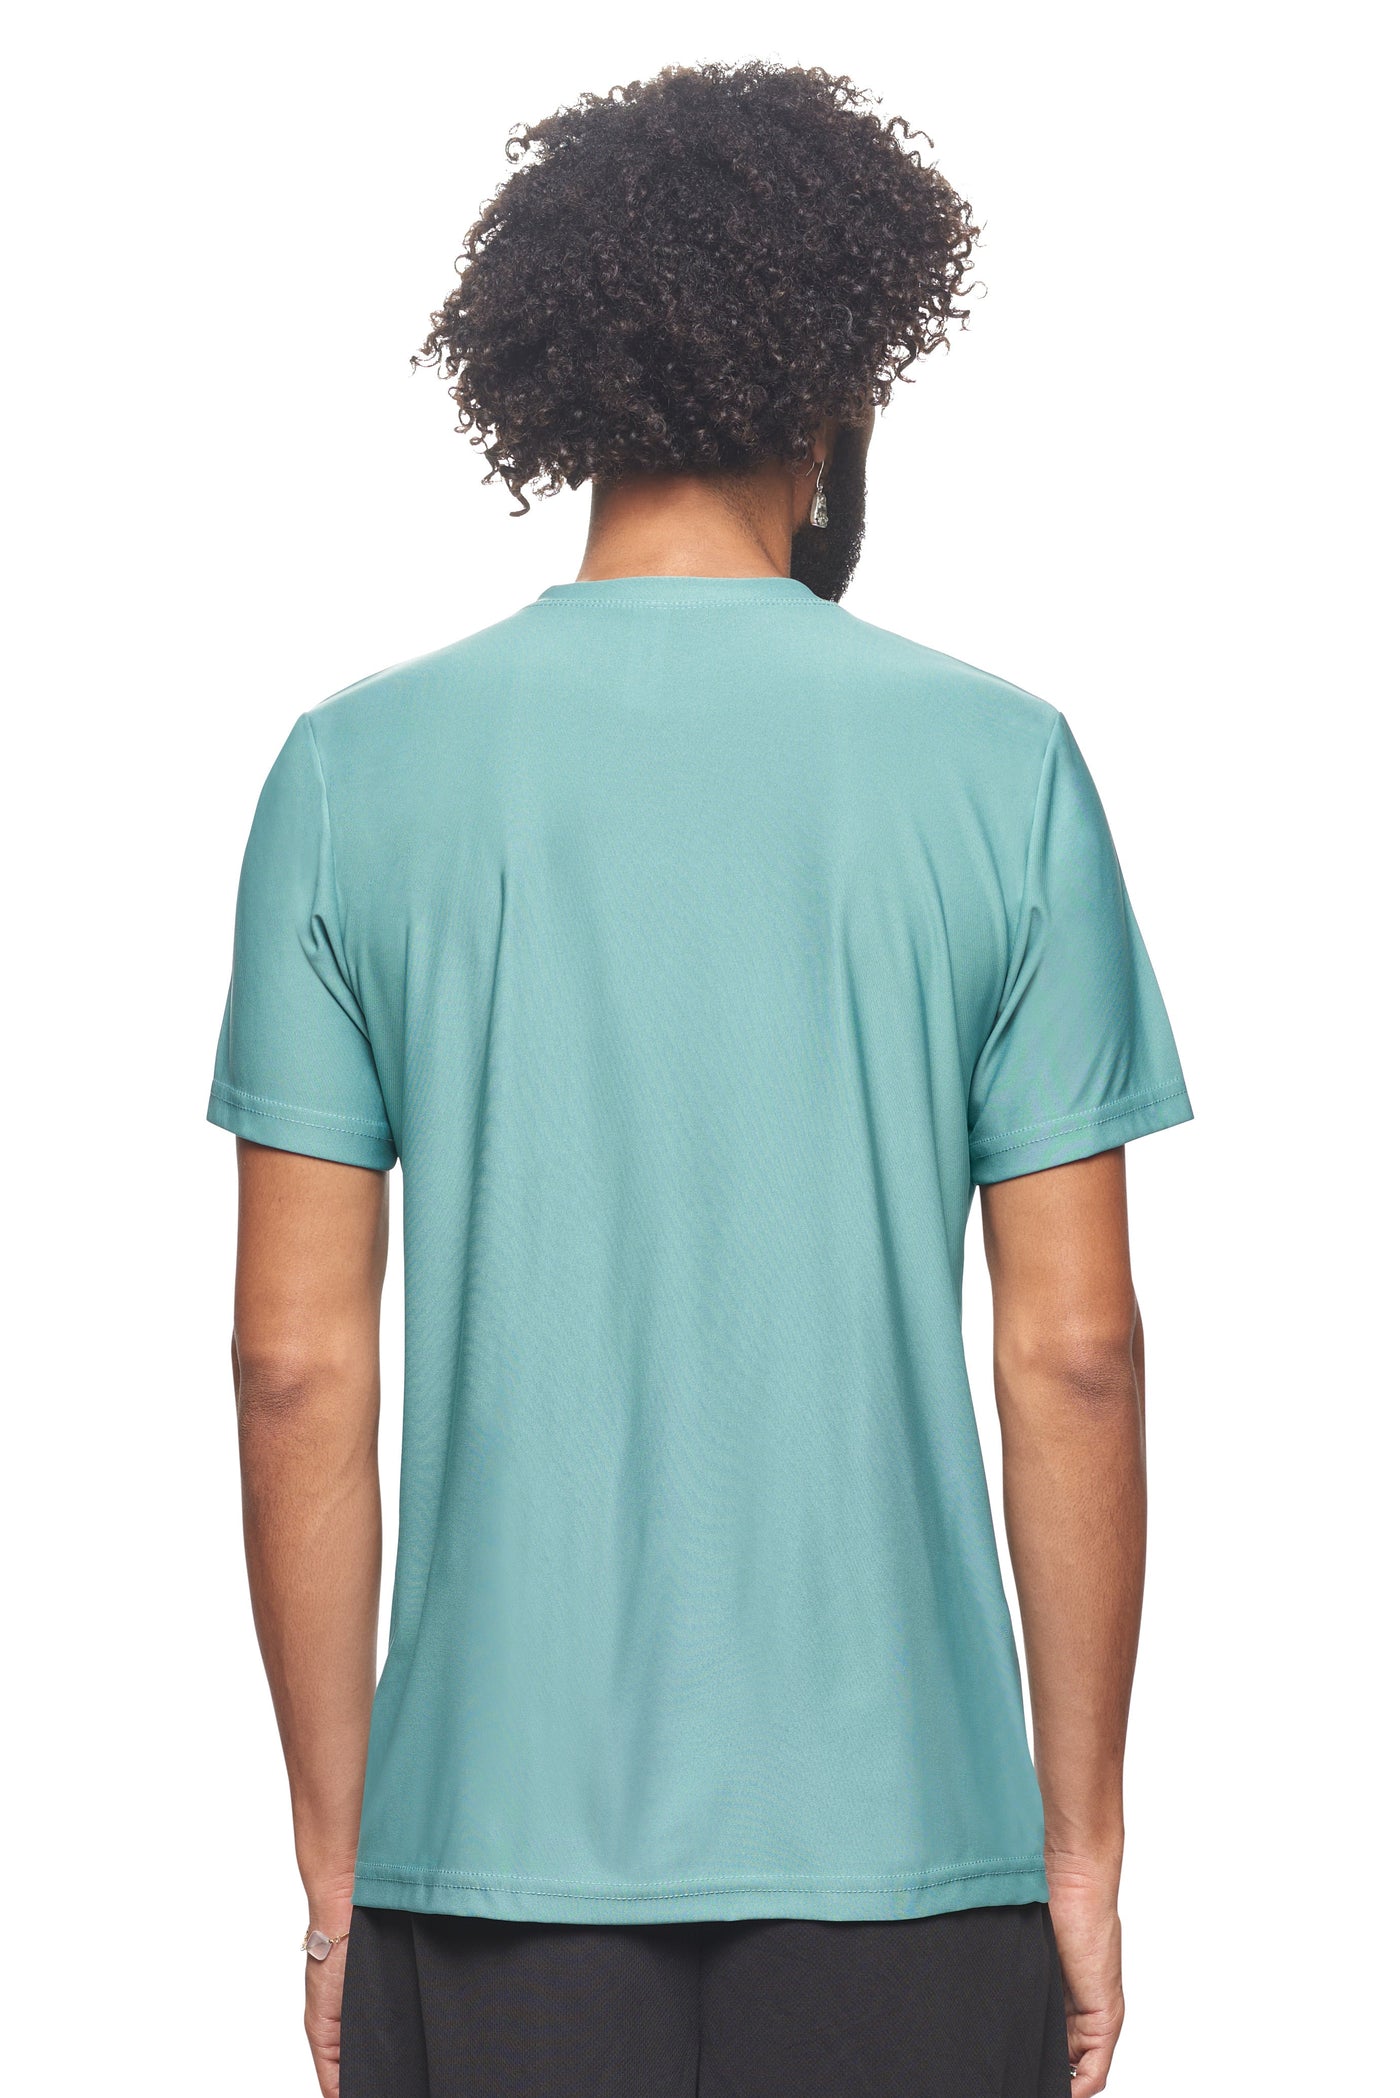 Expert Brand Unisex Men Recycled Polyester REPREVE® T-Shirt Made in USA in juniper green image 3#color_juniper